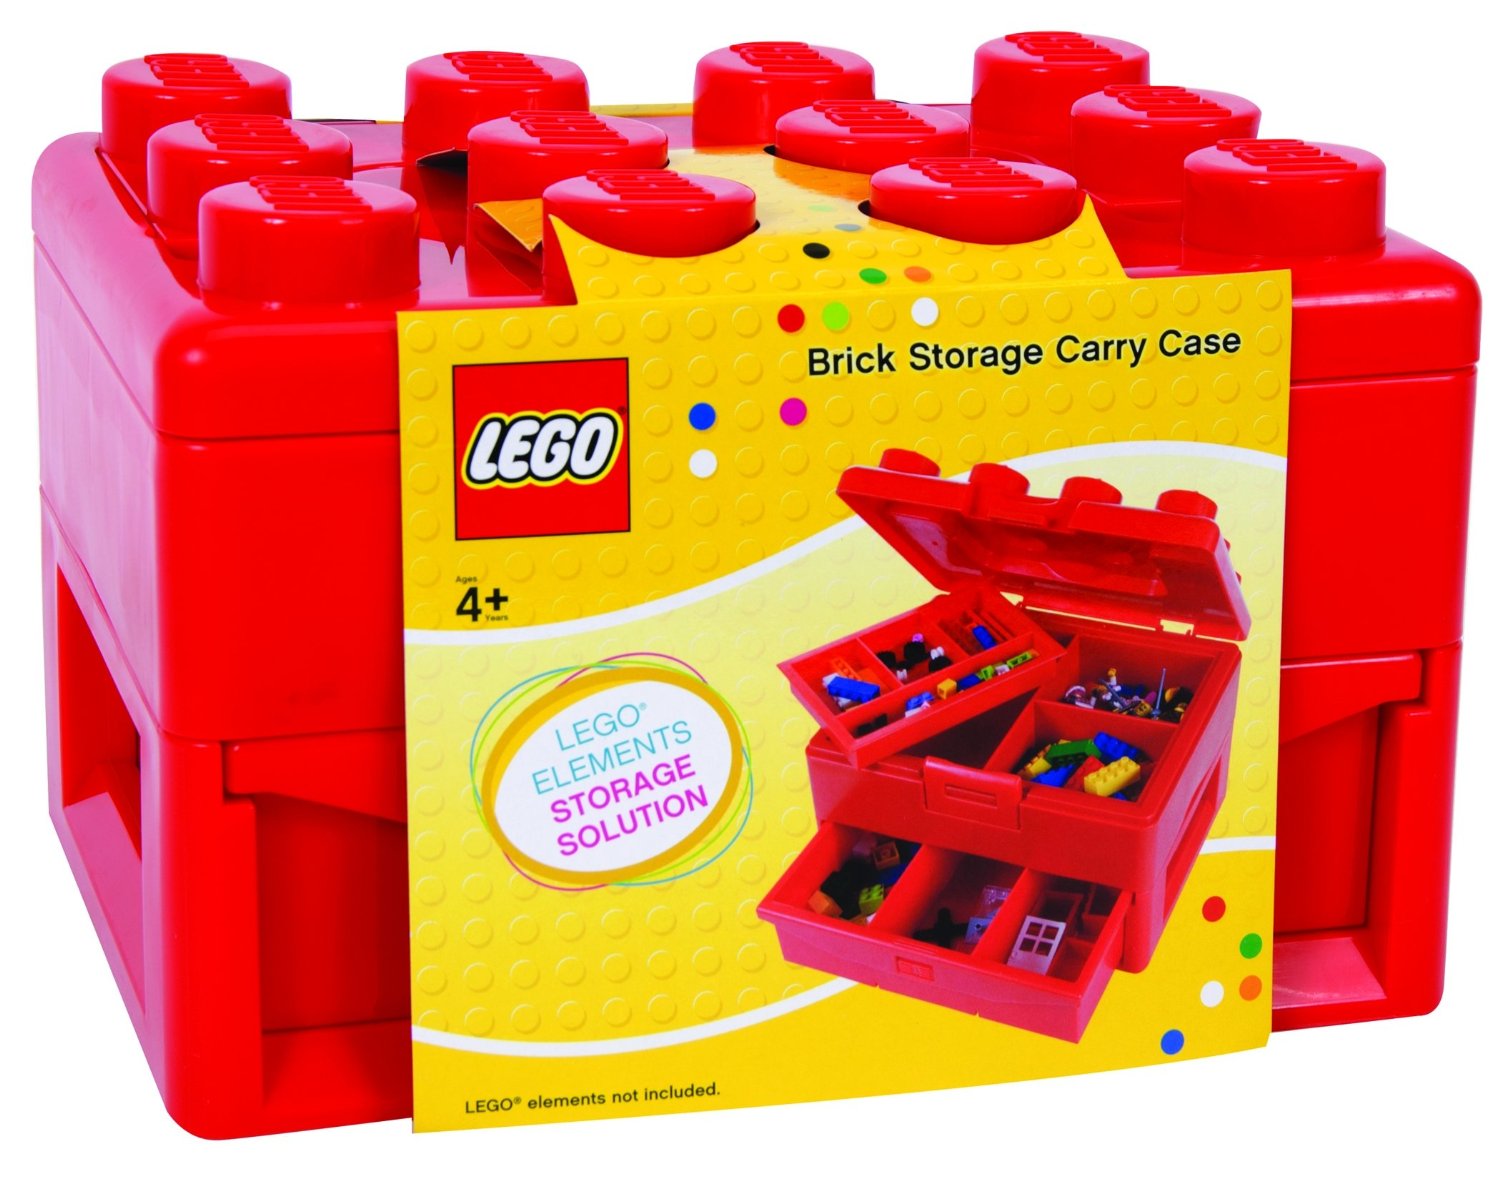 lego classic builder box